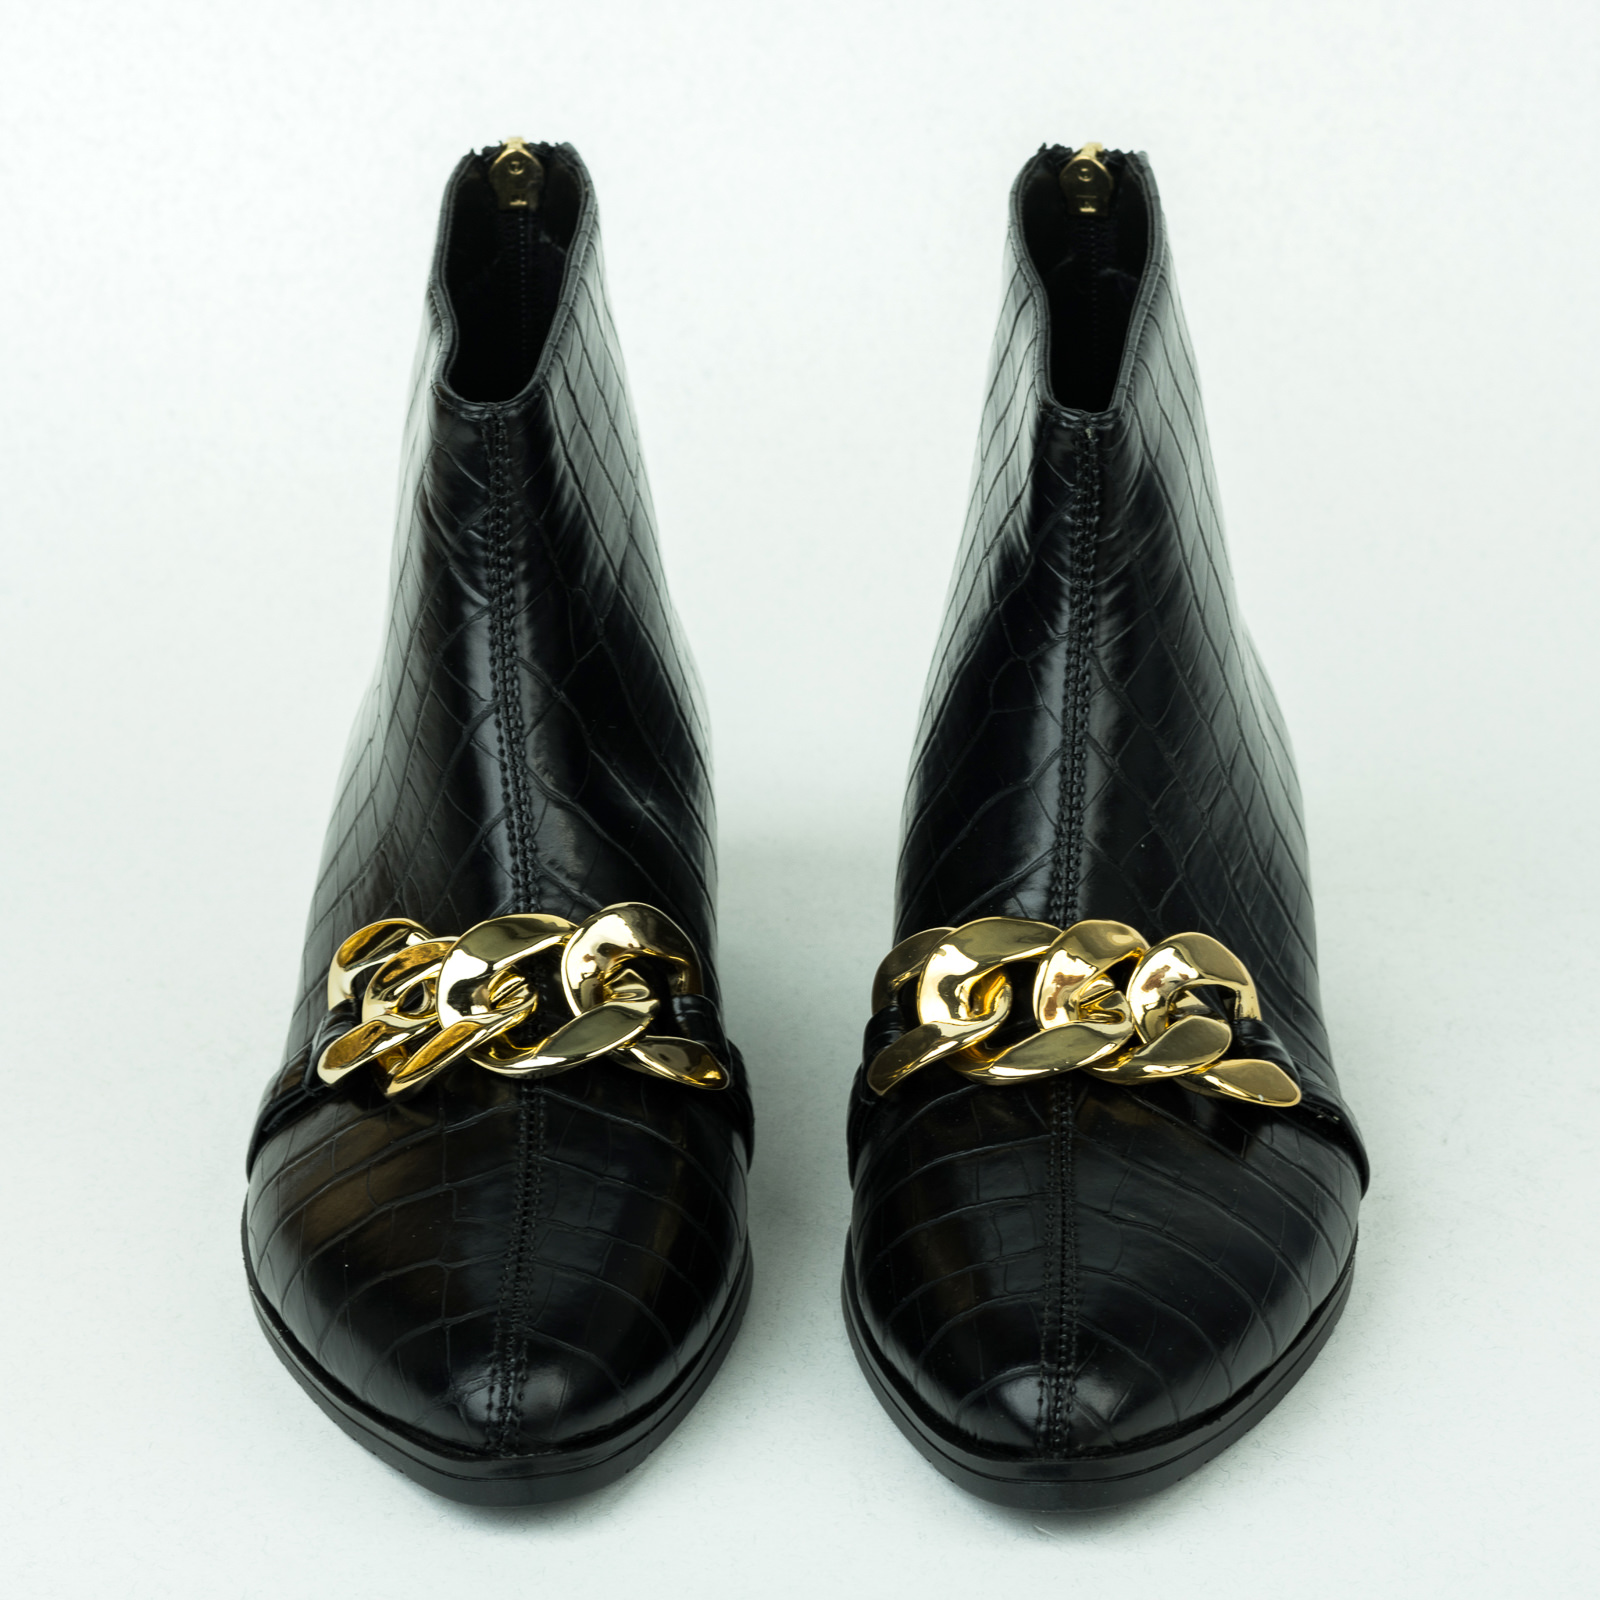 Women ankle boots B356 - BLACK